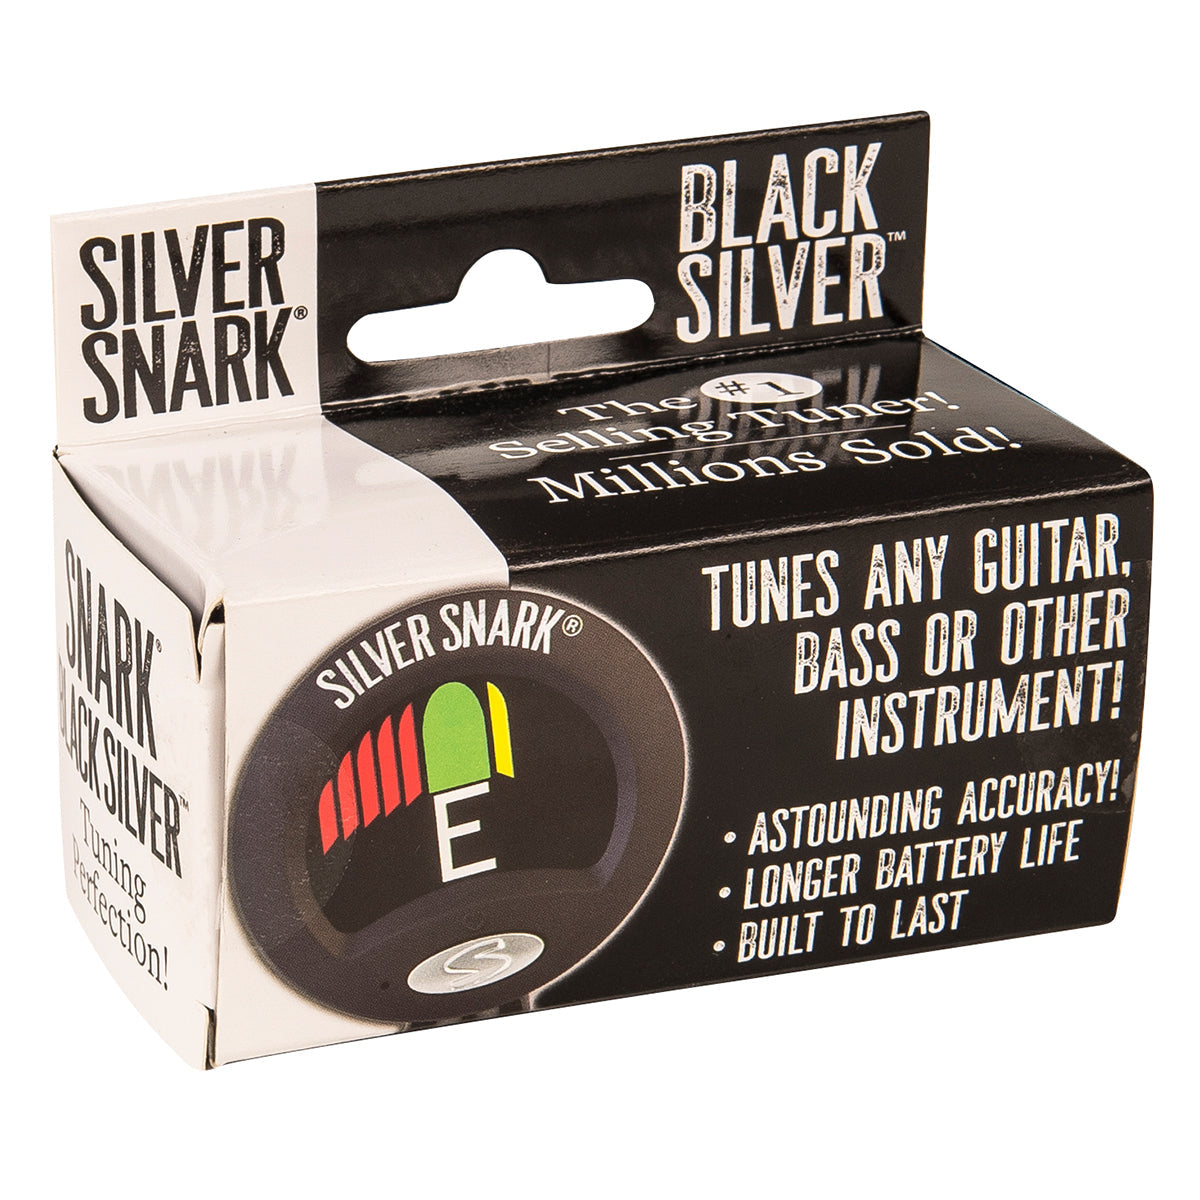 Silver Snark 2 Clip-on All Instrument Tuner ~ Black Silver